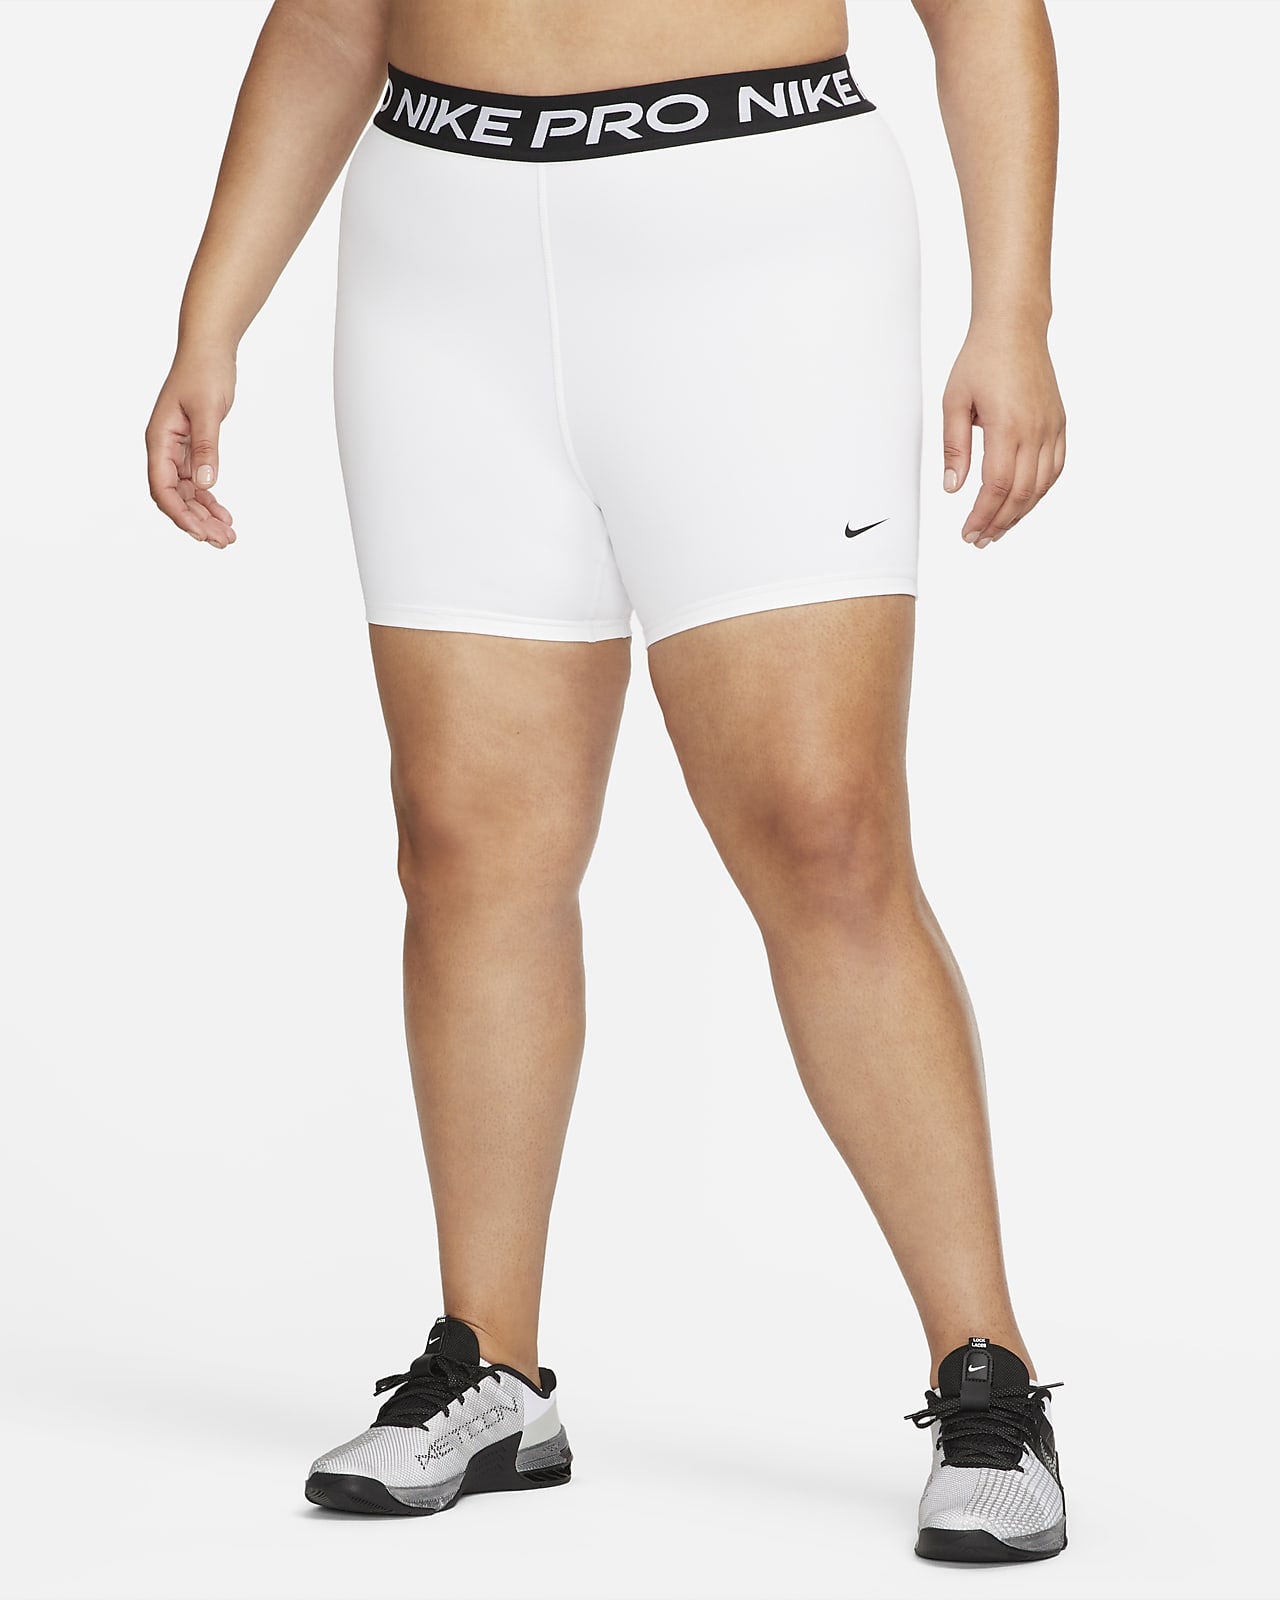 Shorts Nike Pro 365 de 13 cm para mujer (talla grande)